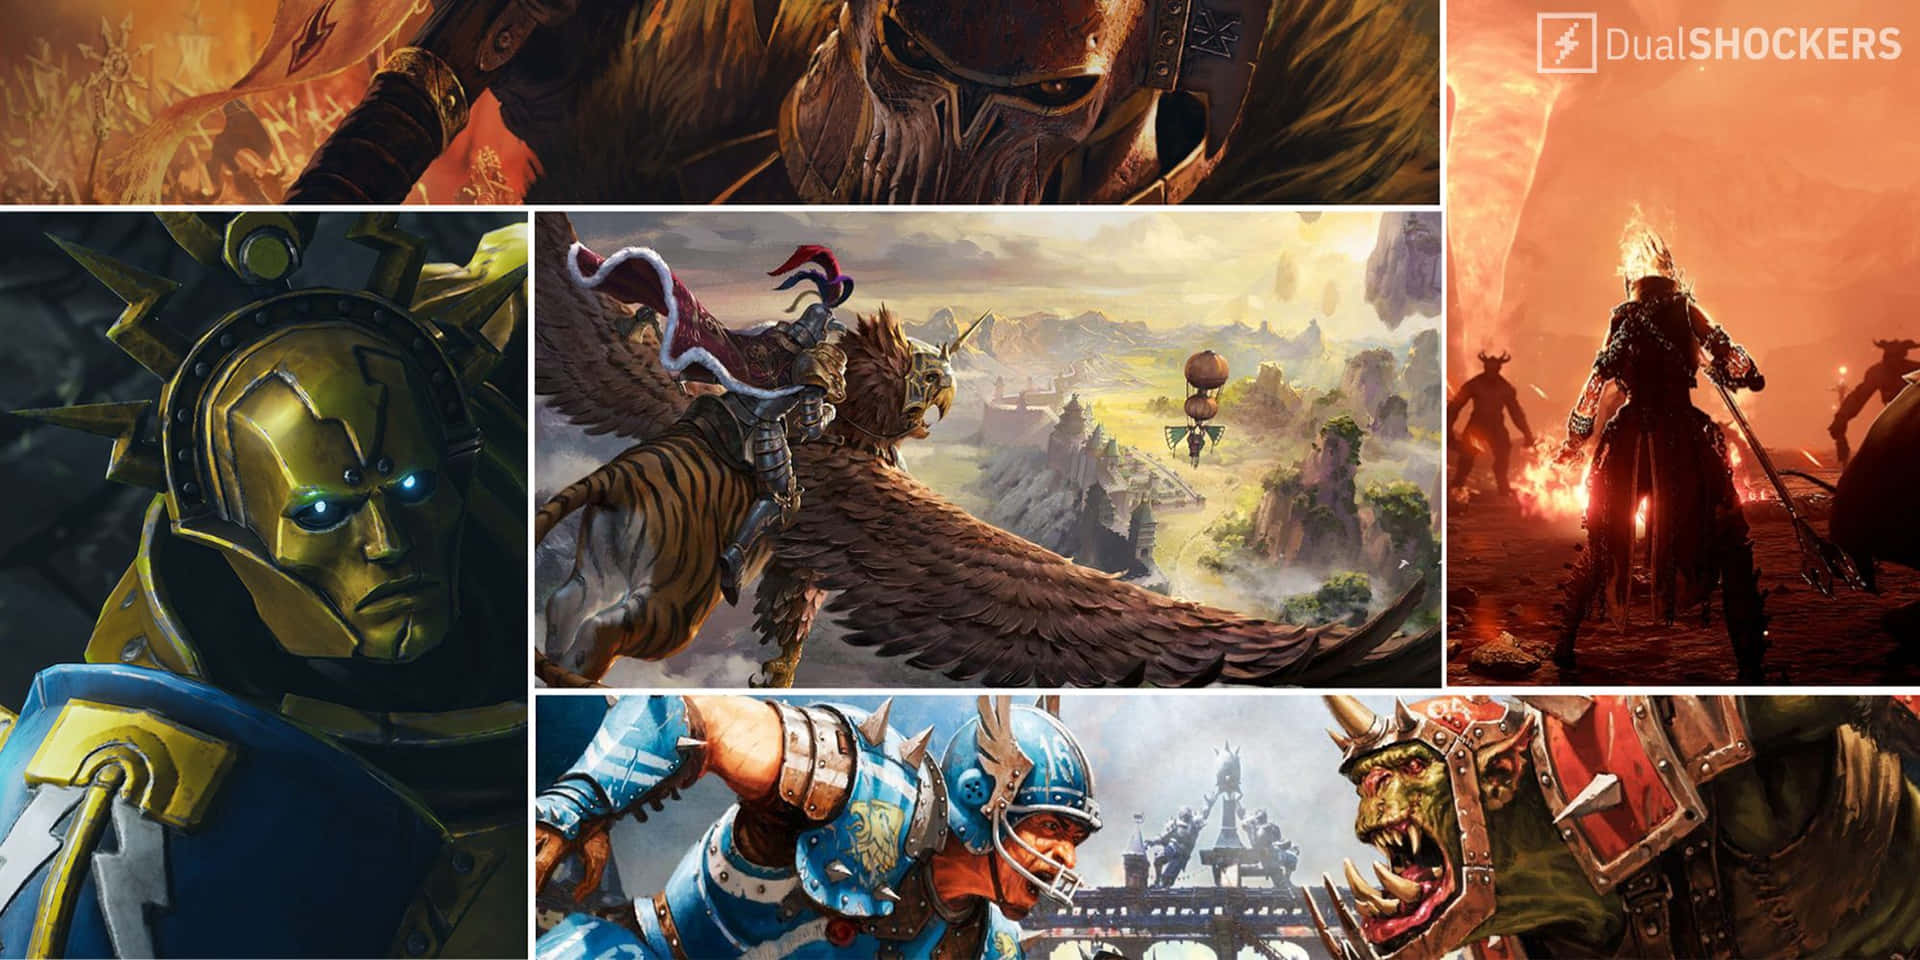 Captivating Fantasy Game Battle Scene Wallpaper